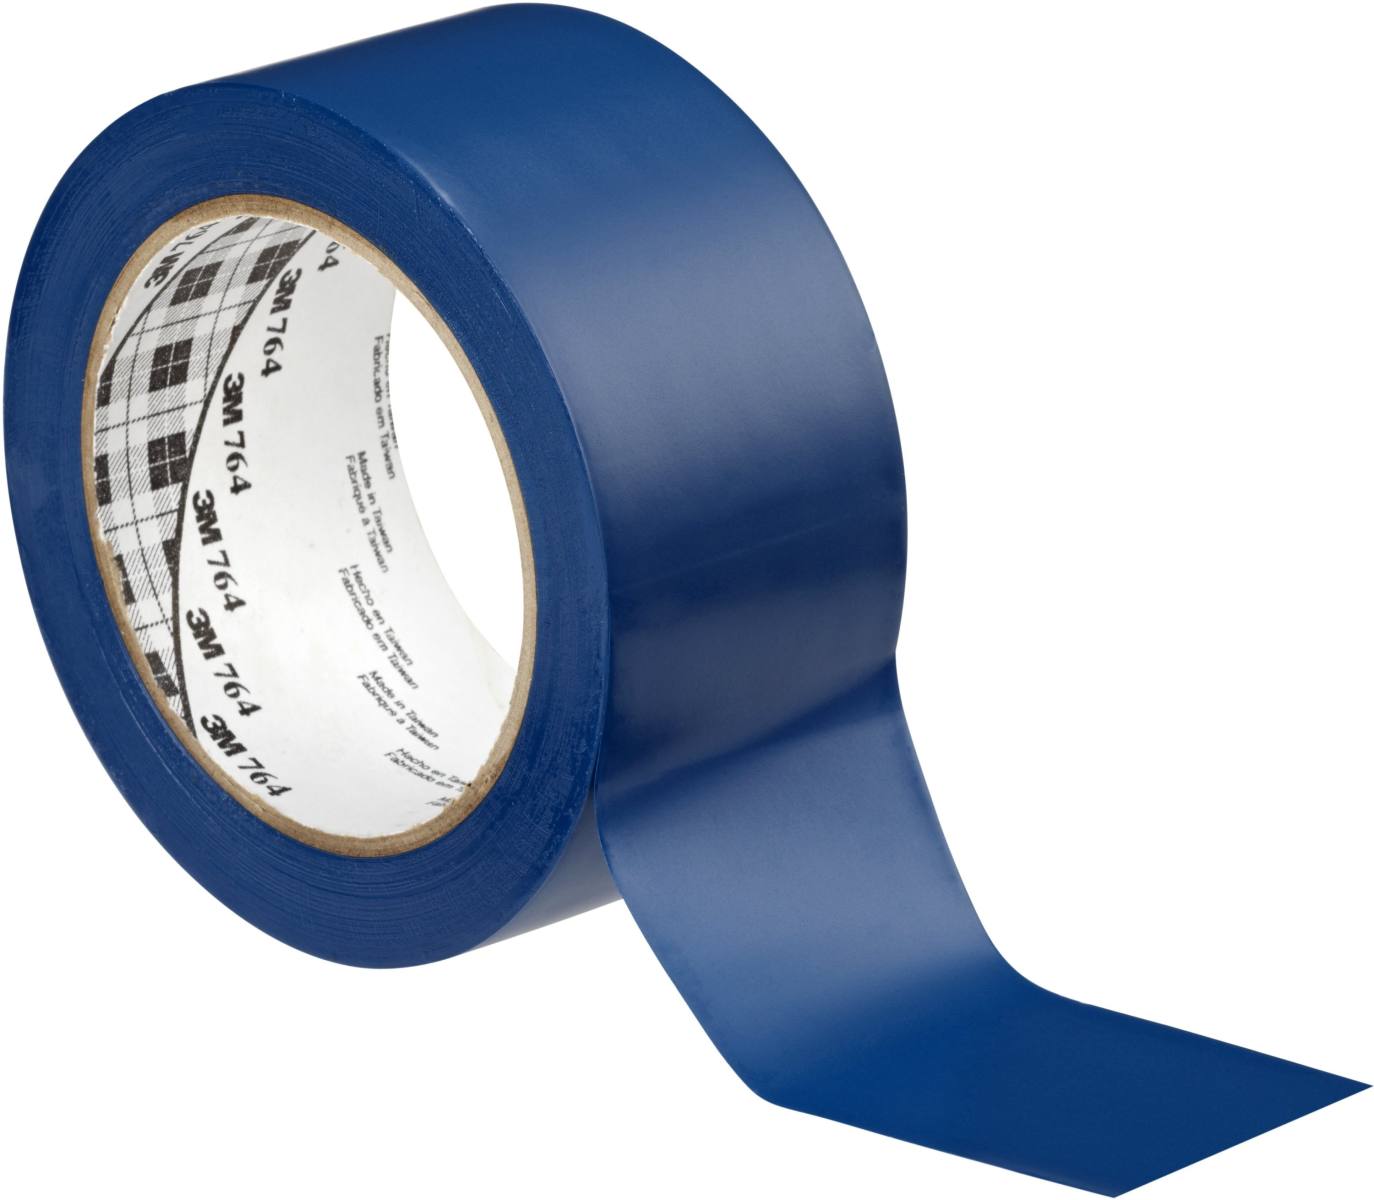 3M Ruban adhésif polyvalent en PVC 764, bleu, 50 mm x 33 m, emballage individuel pratique